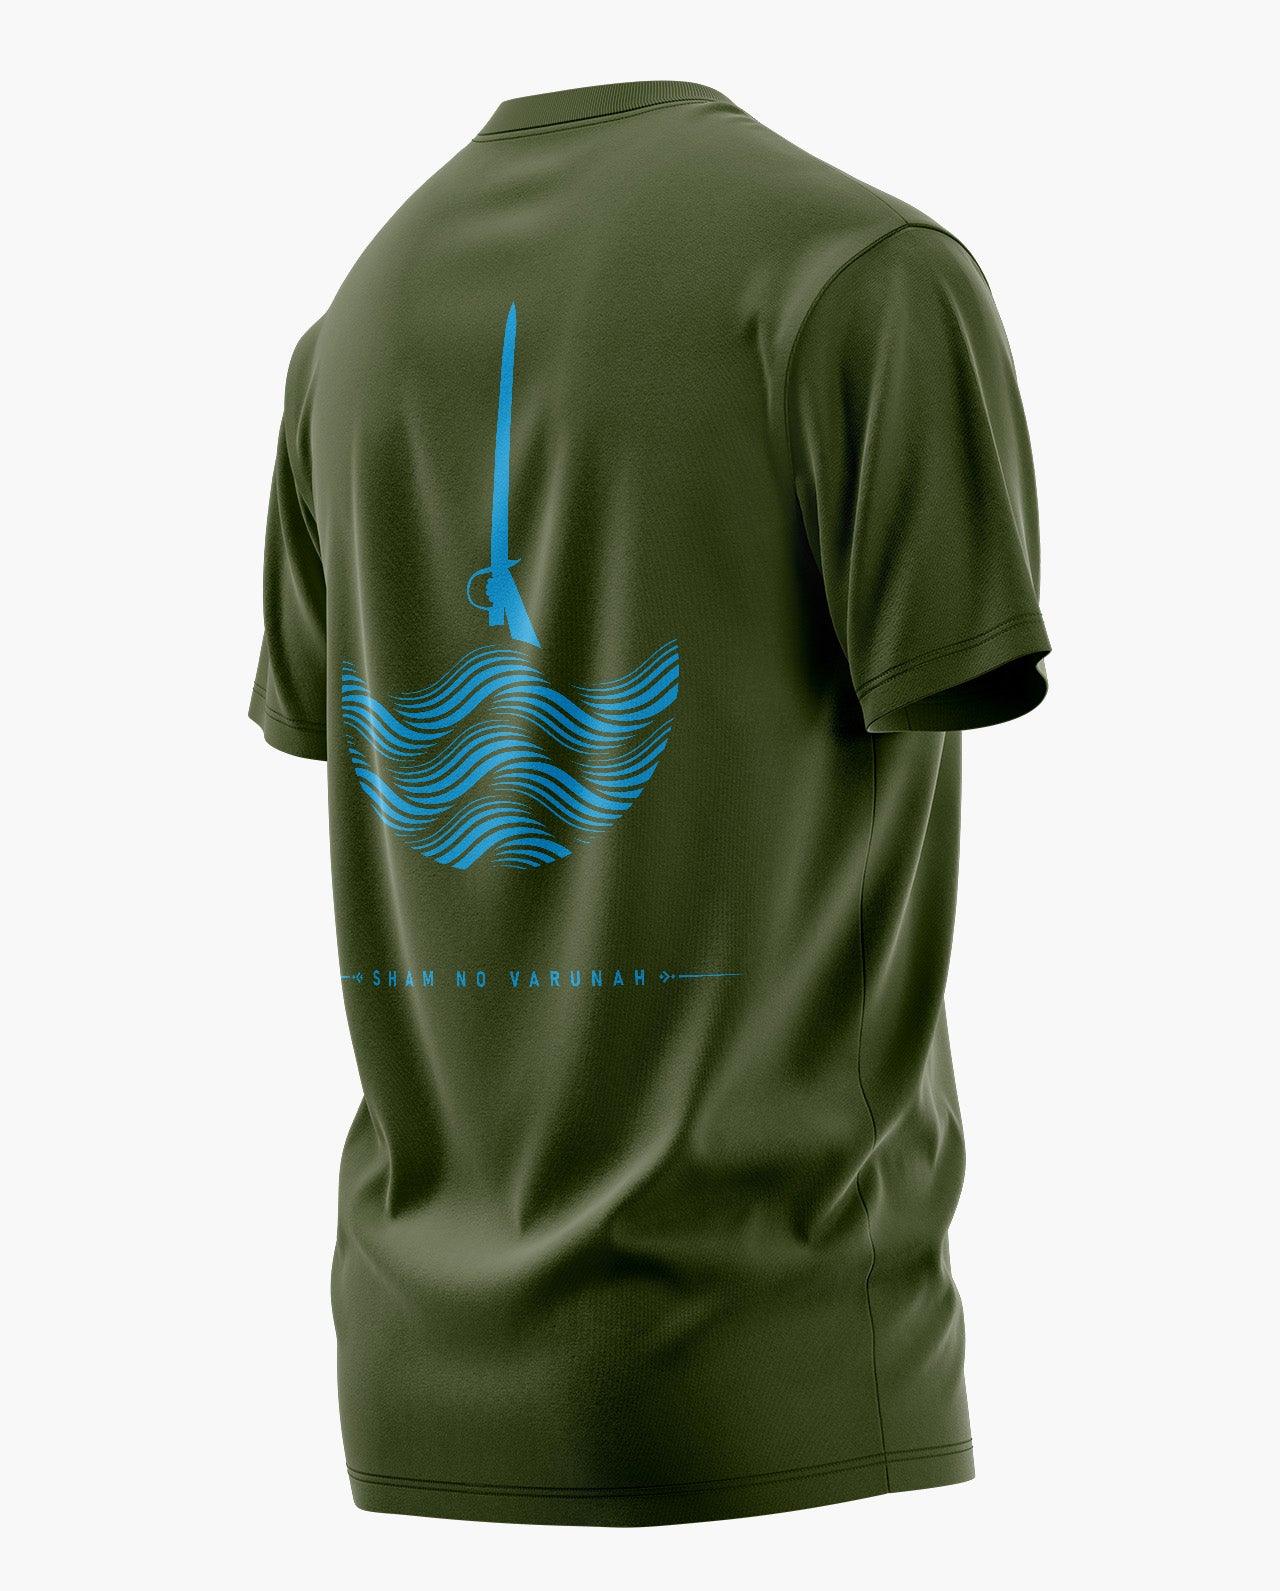 Western Fleet T-Shirt - Aero Armour